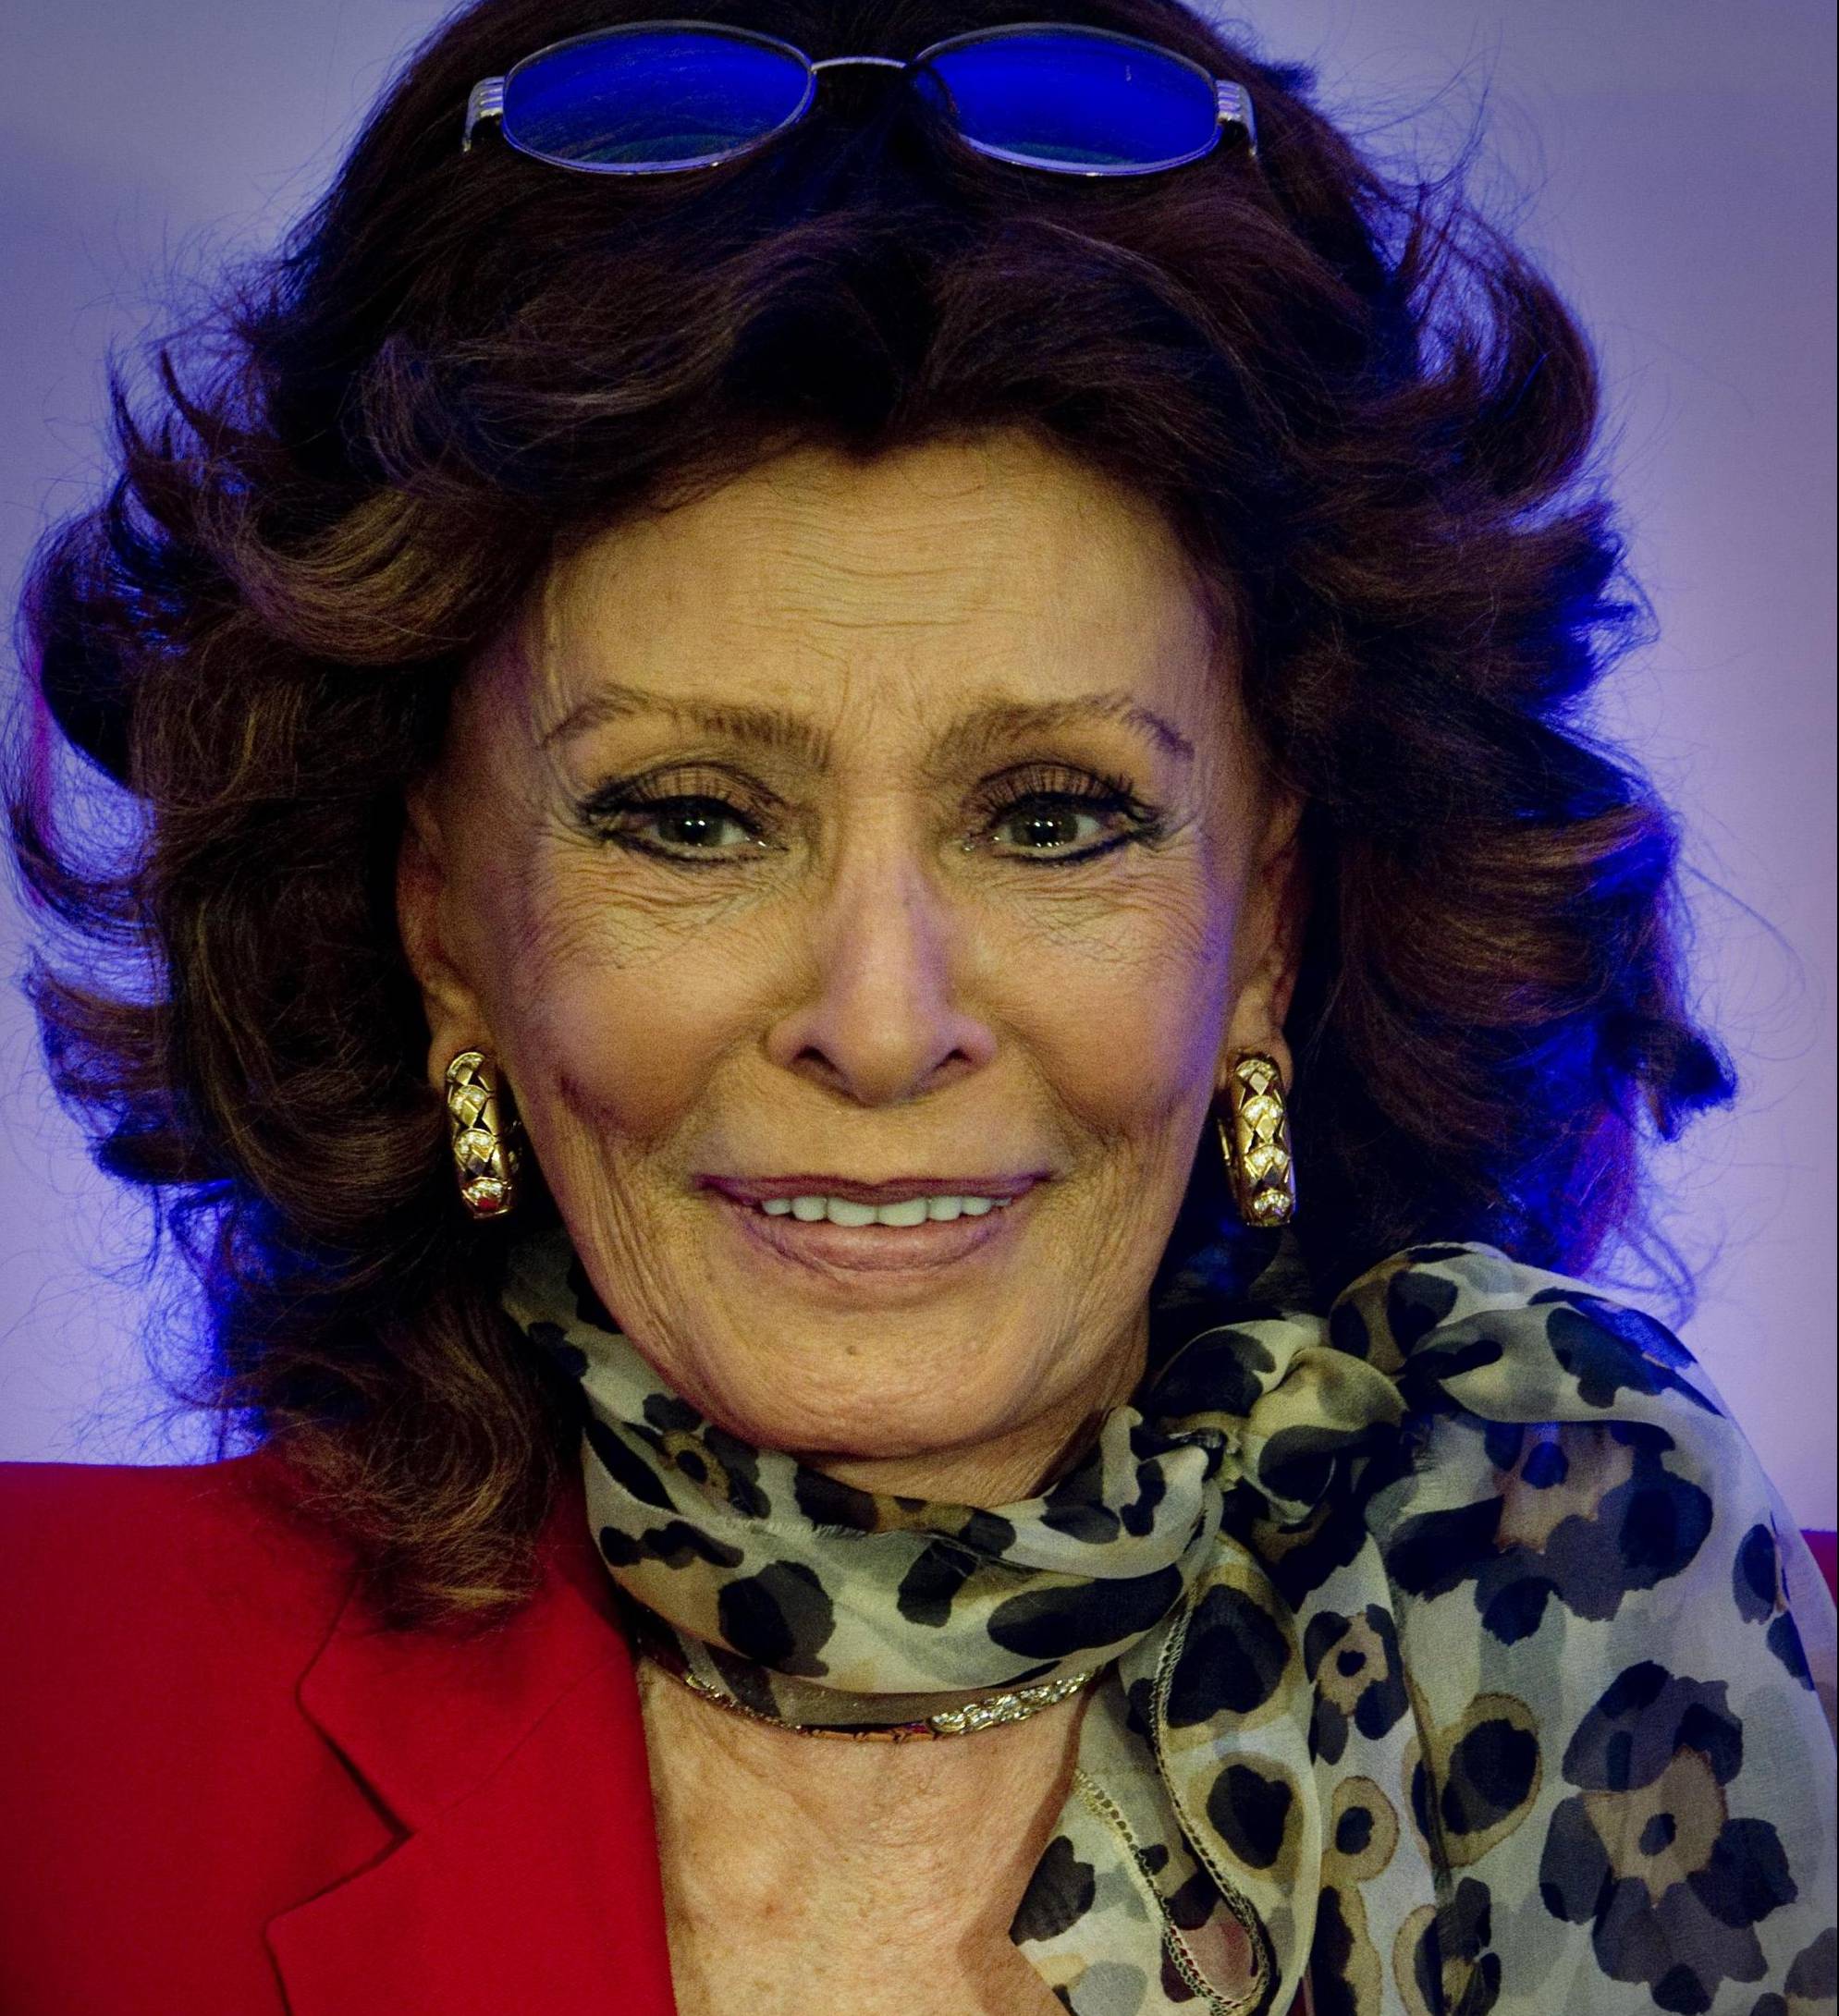 Sophia Loren cittadina onoraria di Napoli